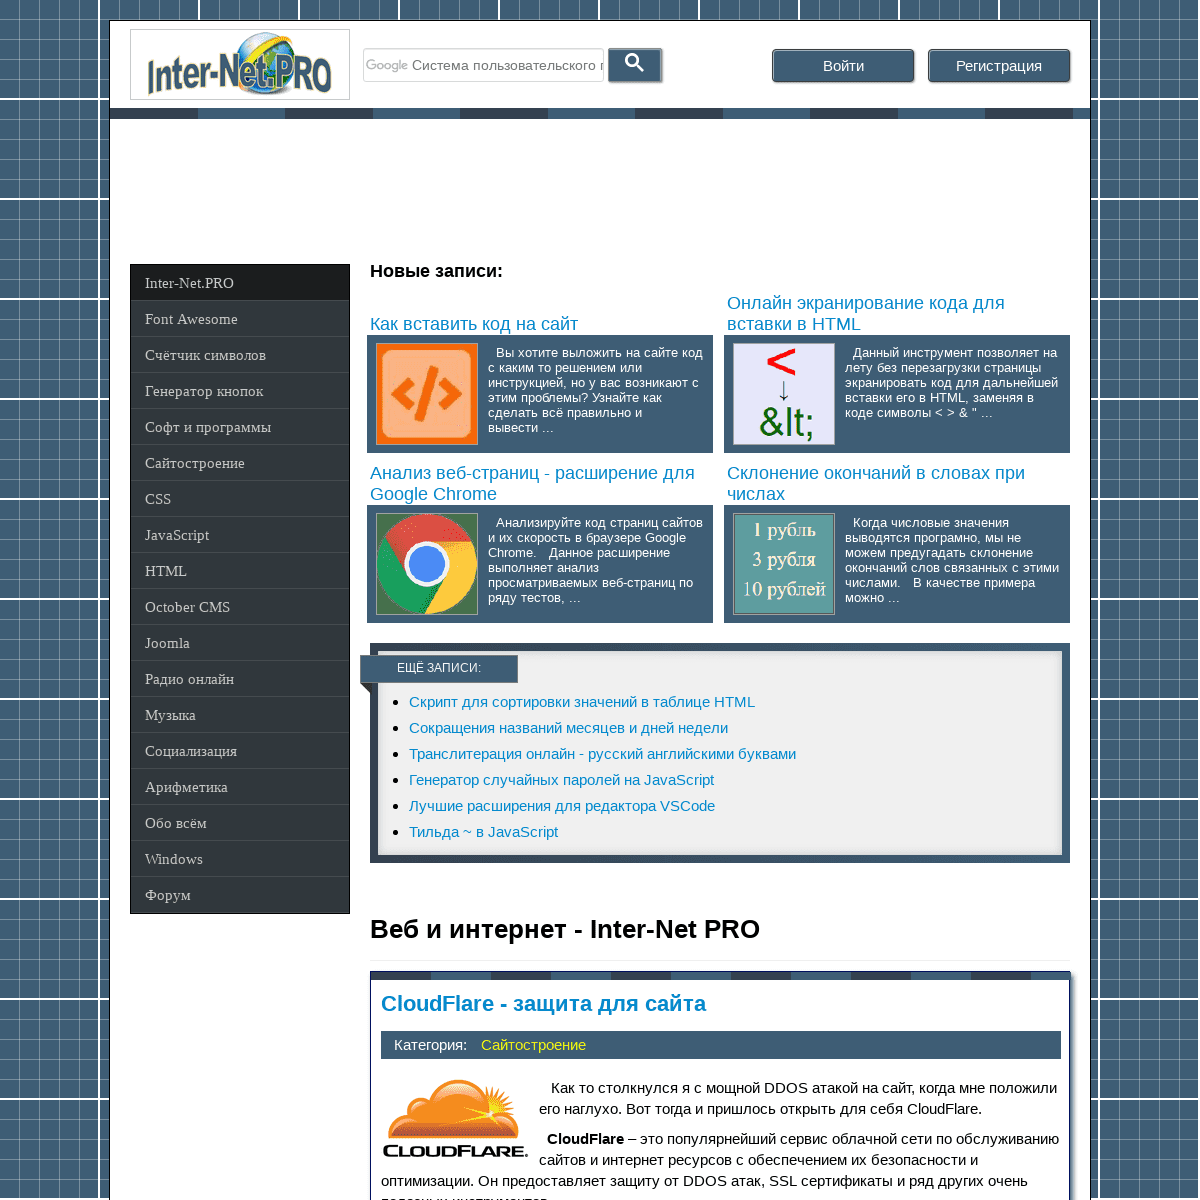 Inter-Net.PRO - проект про сайты, Web и интернет.